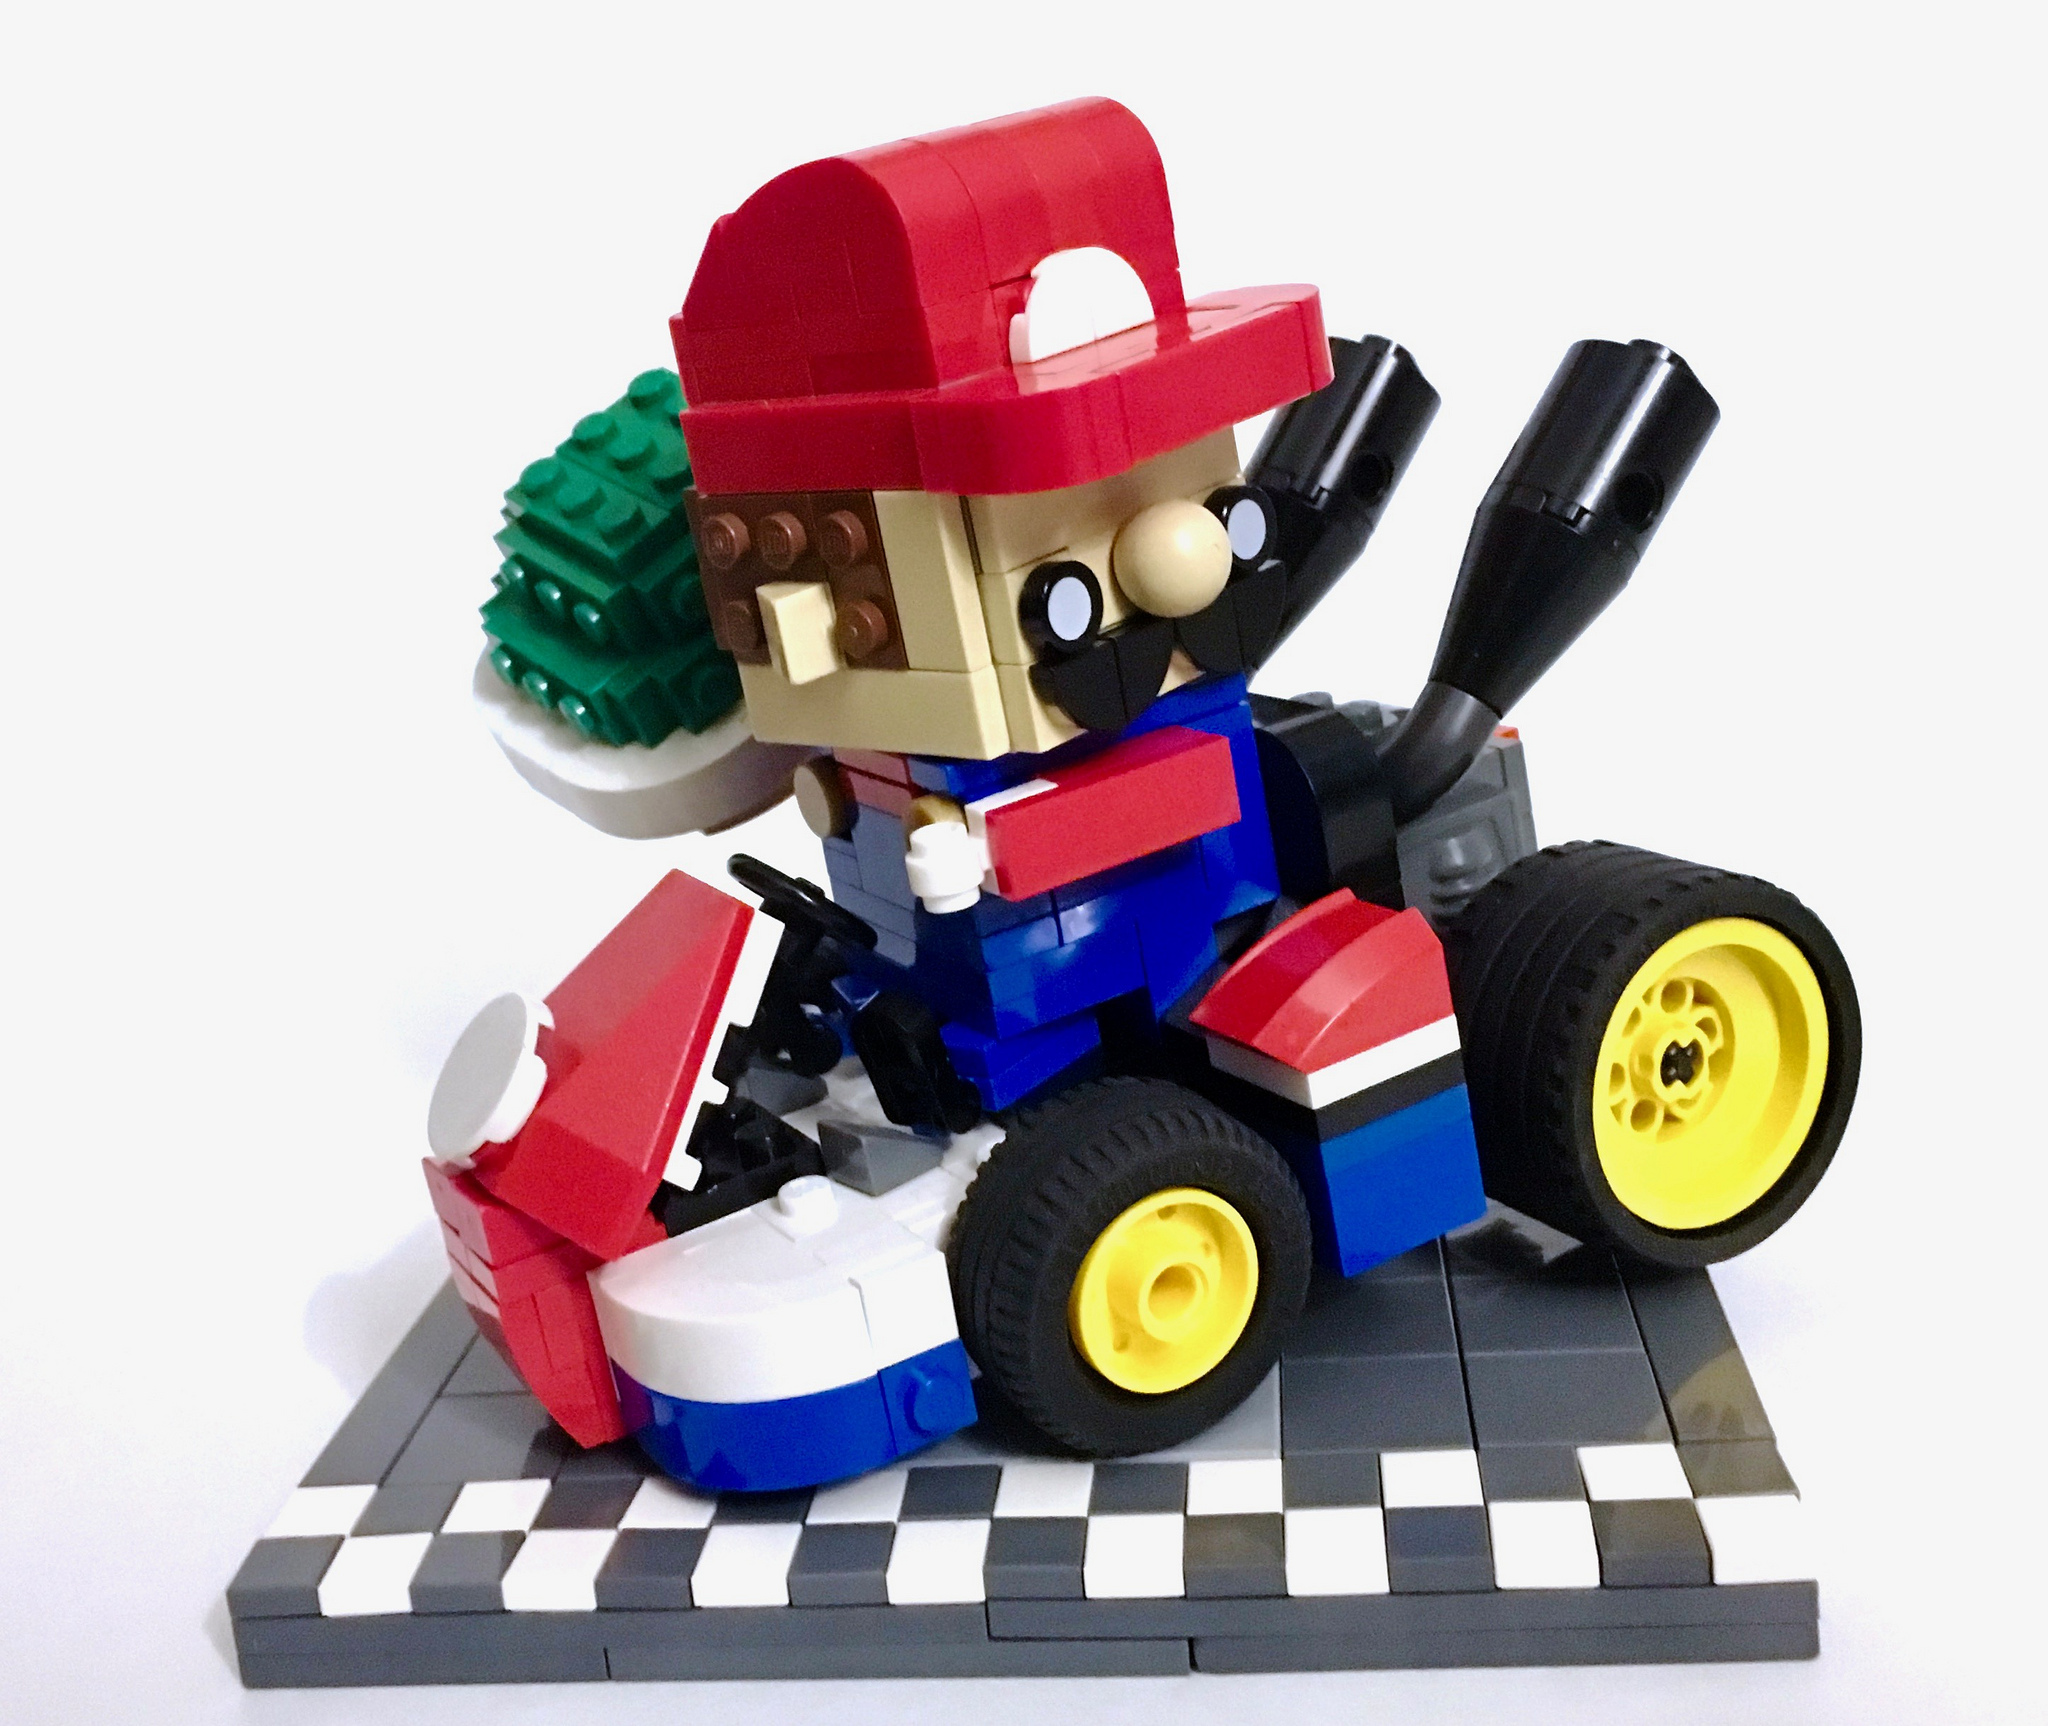 Mario Kart - BrickNerd - All things LEGO and the LEGO fan community